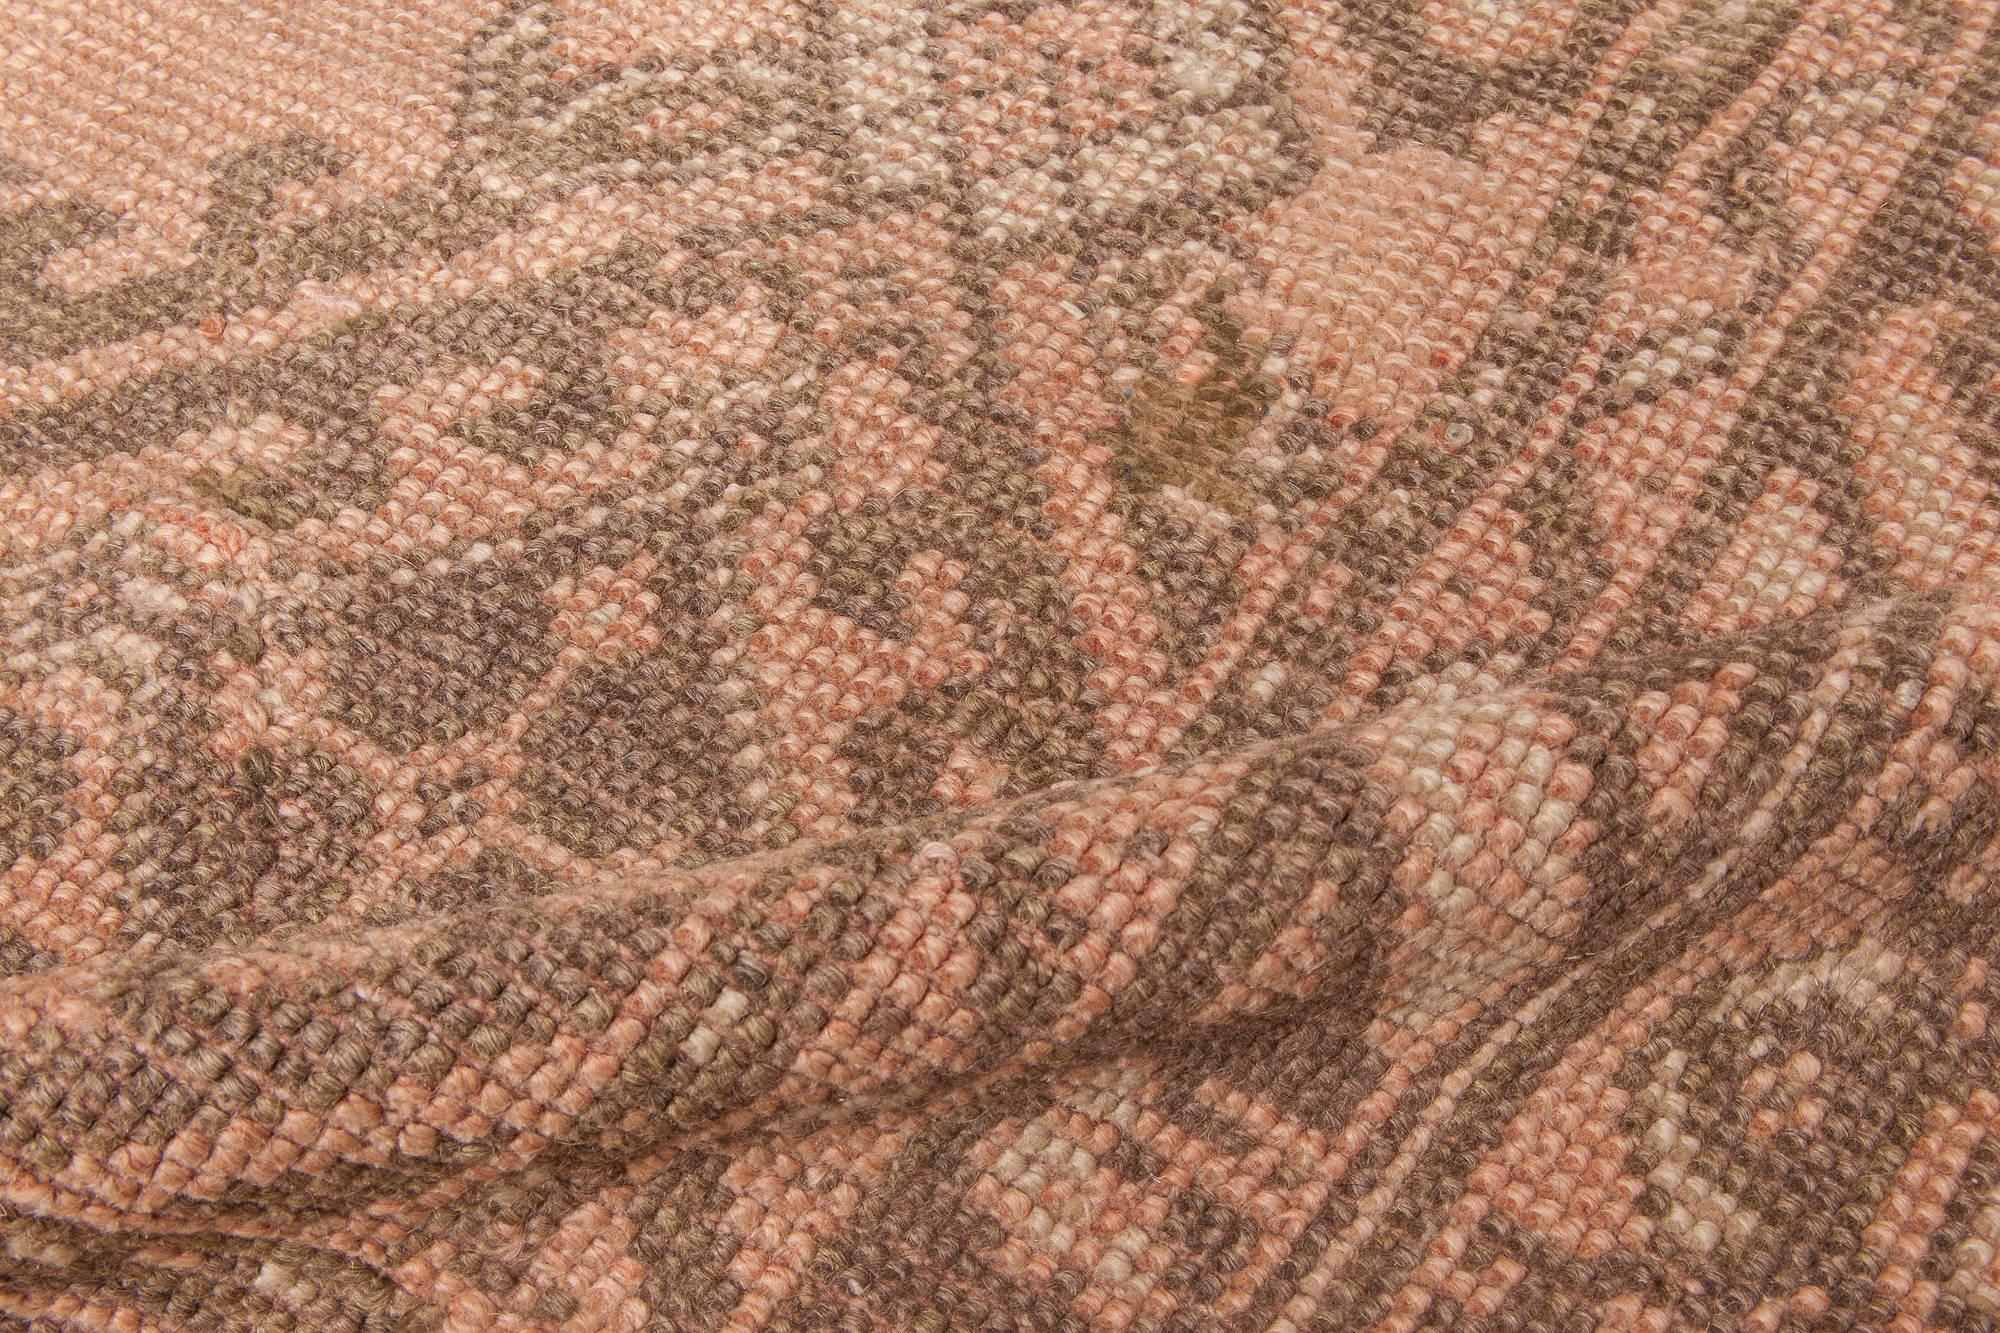 Early 20th century Turkish Oushak handmade wool rug
Size: 11'8